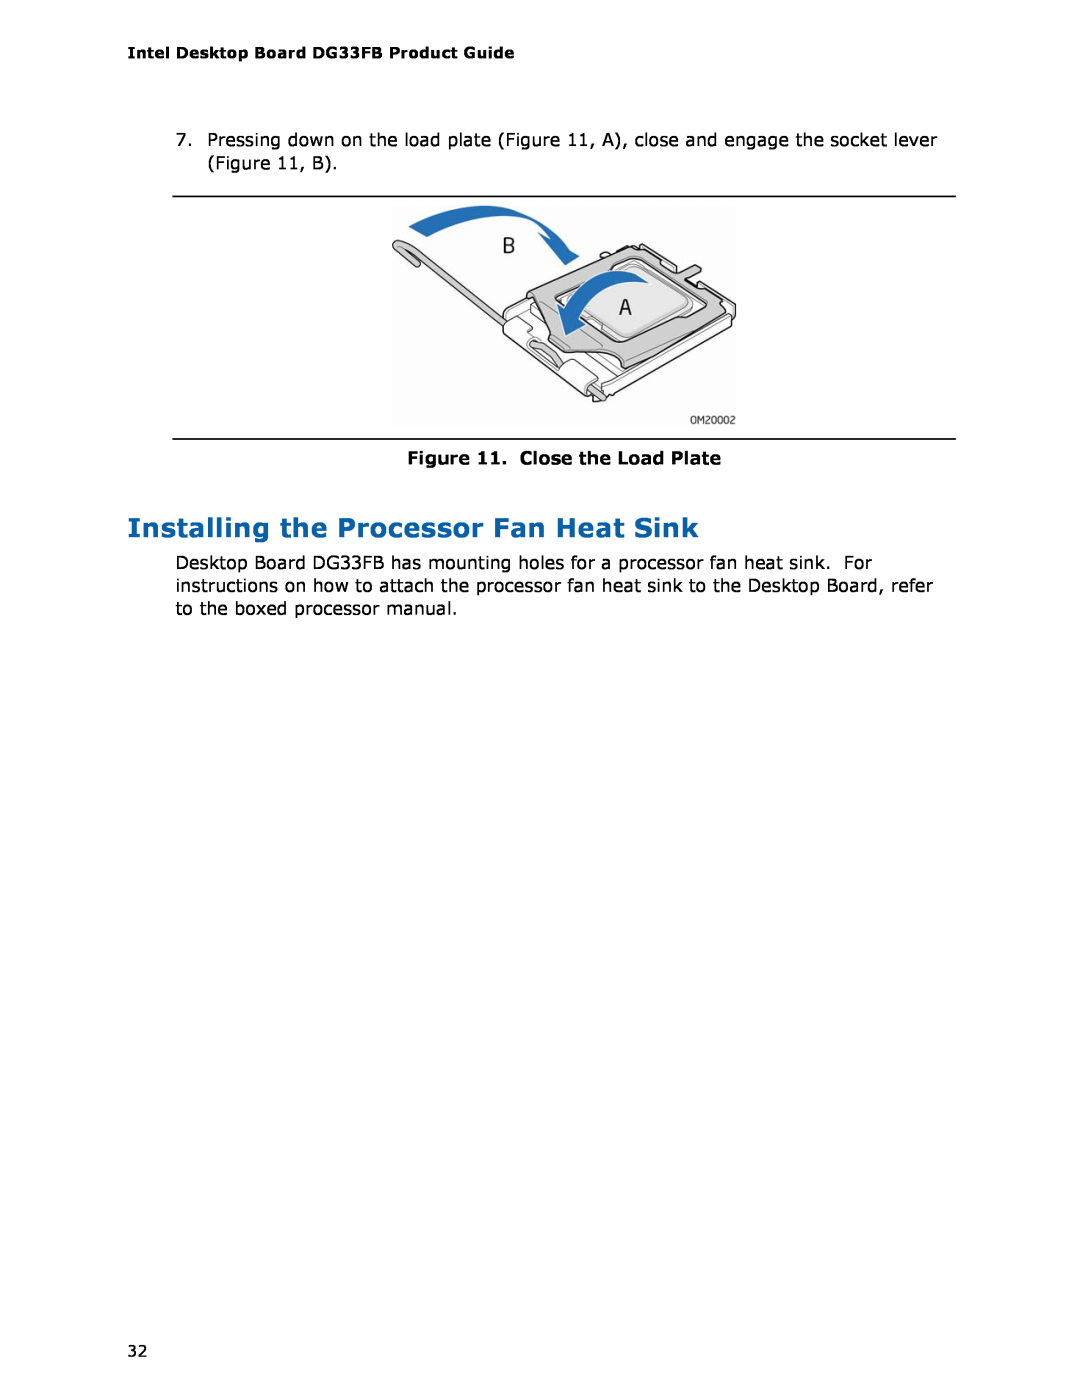 Intel DG33FB manual Installing the Processor Fan Heat Sink, Close the Load Plate 